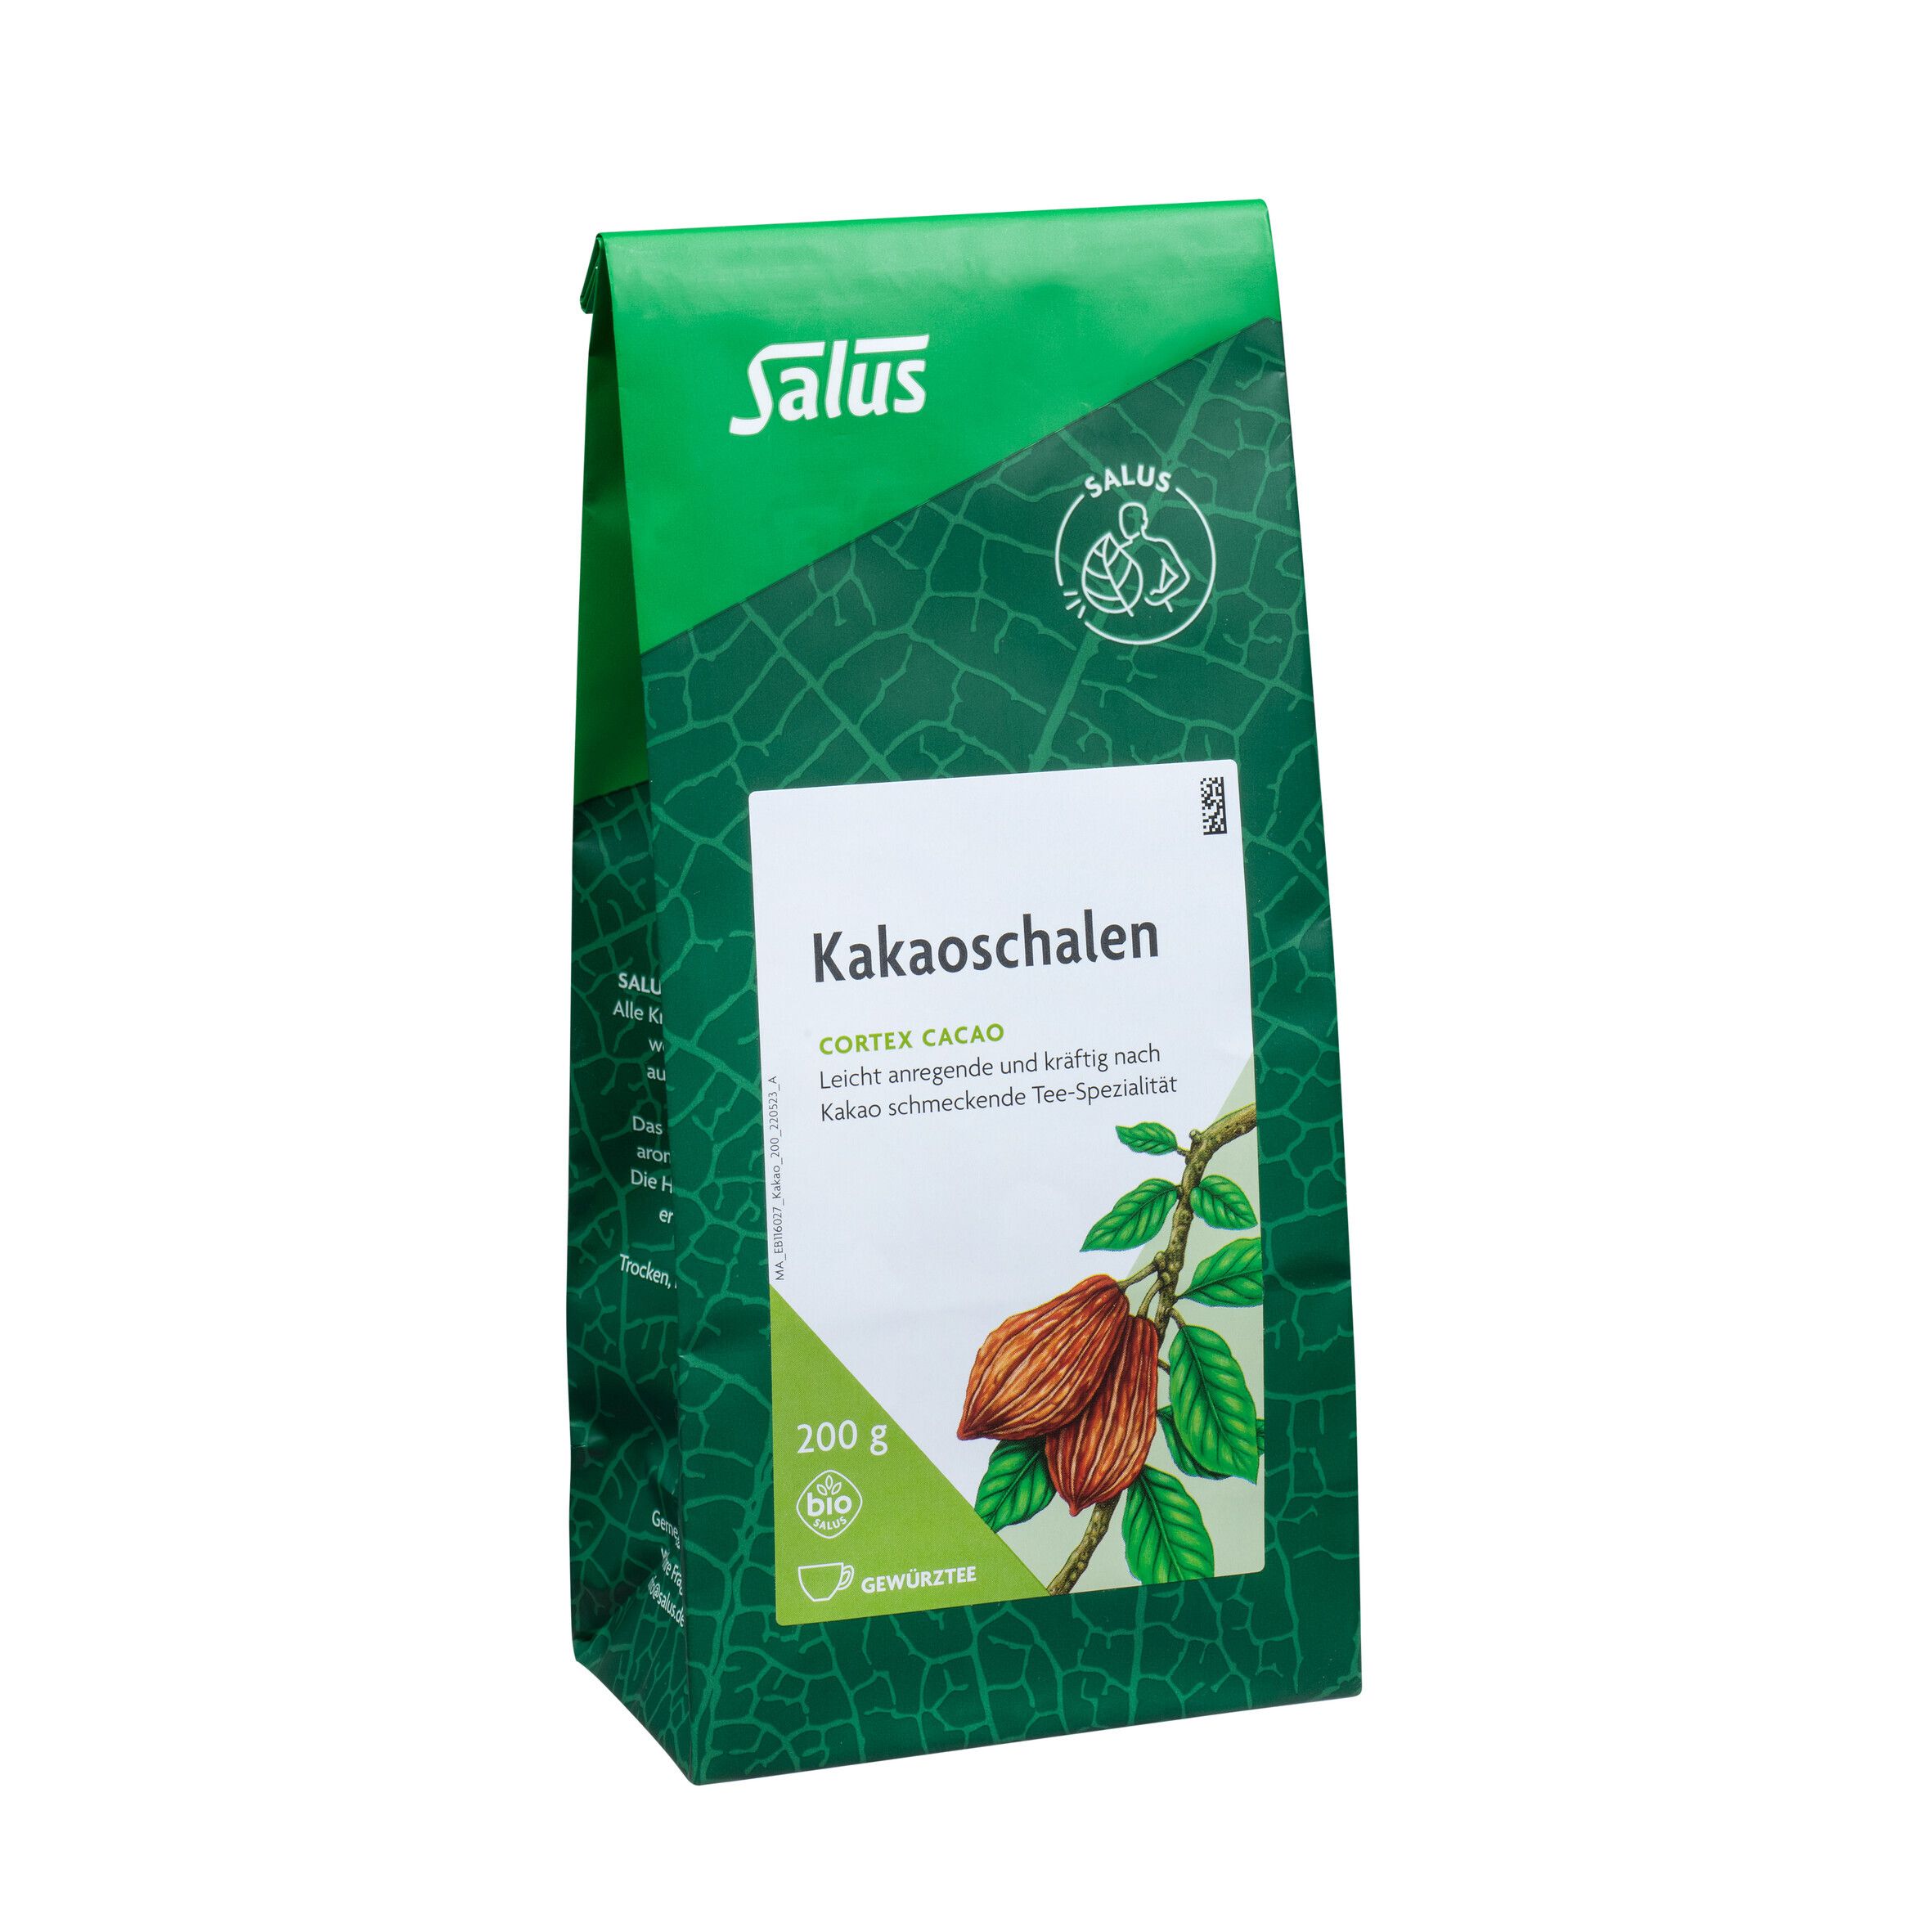 Salus® Kakaoschalen Tee Cortex cacao